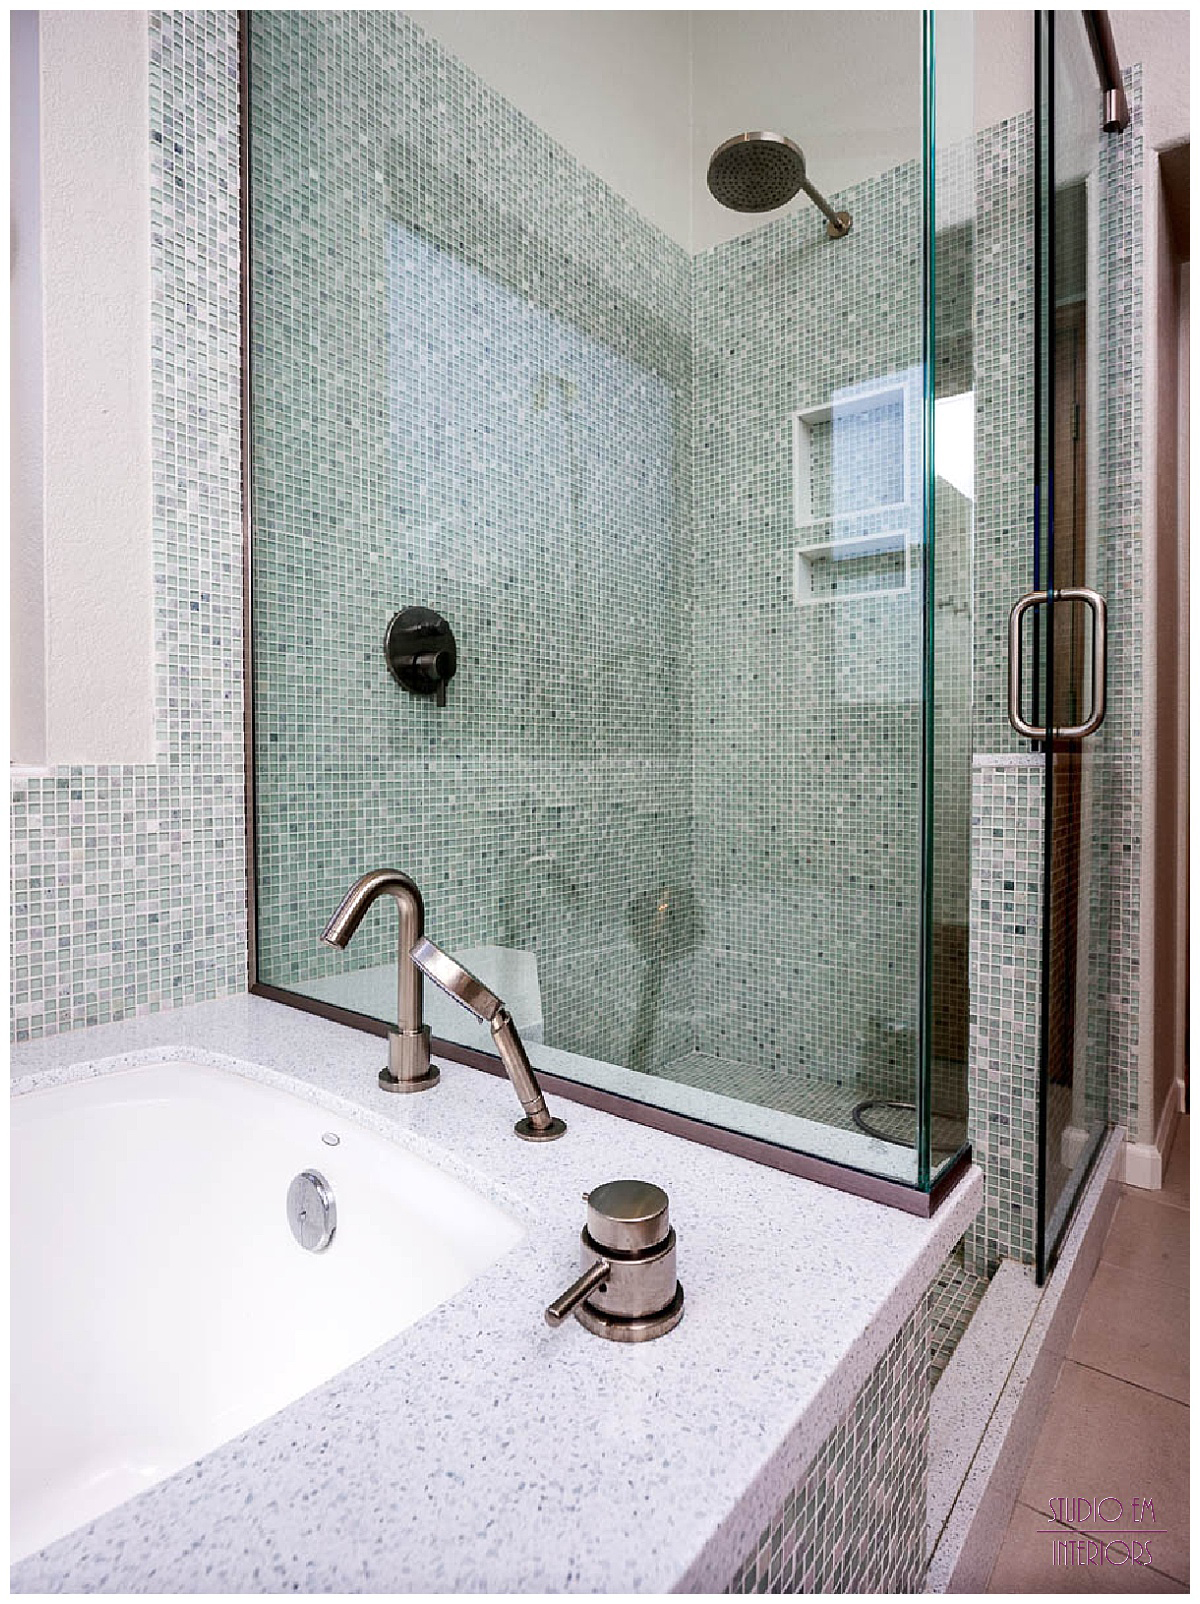 Chandler Spa Suite - Shower and Tub Detail - Studio Em Interiors